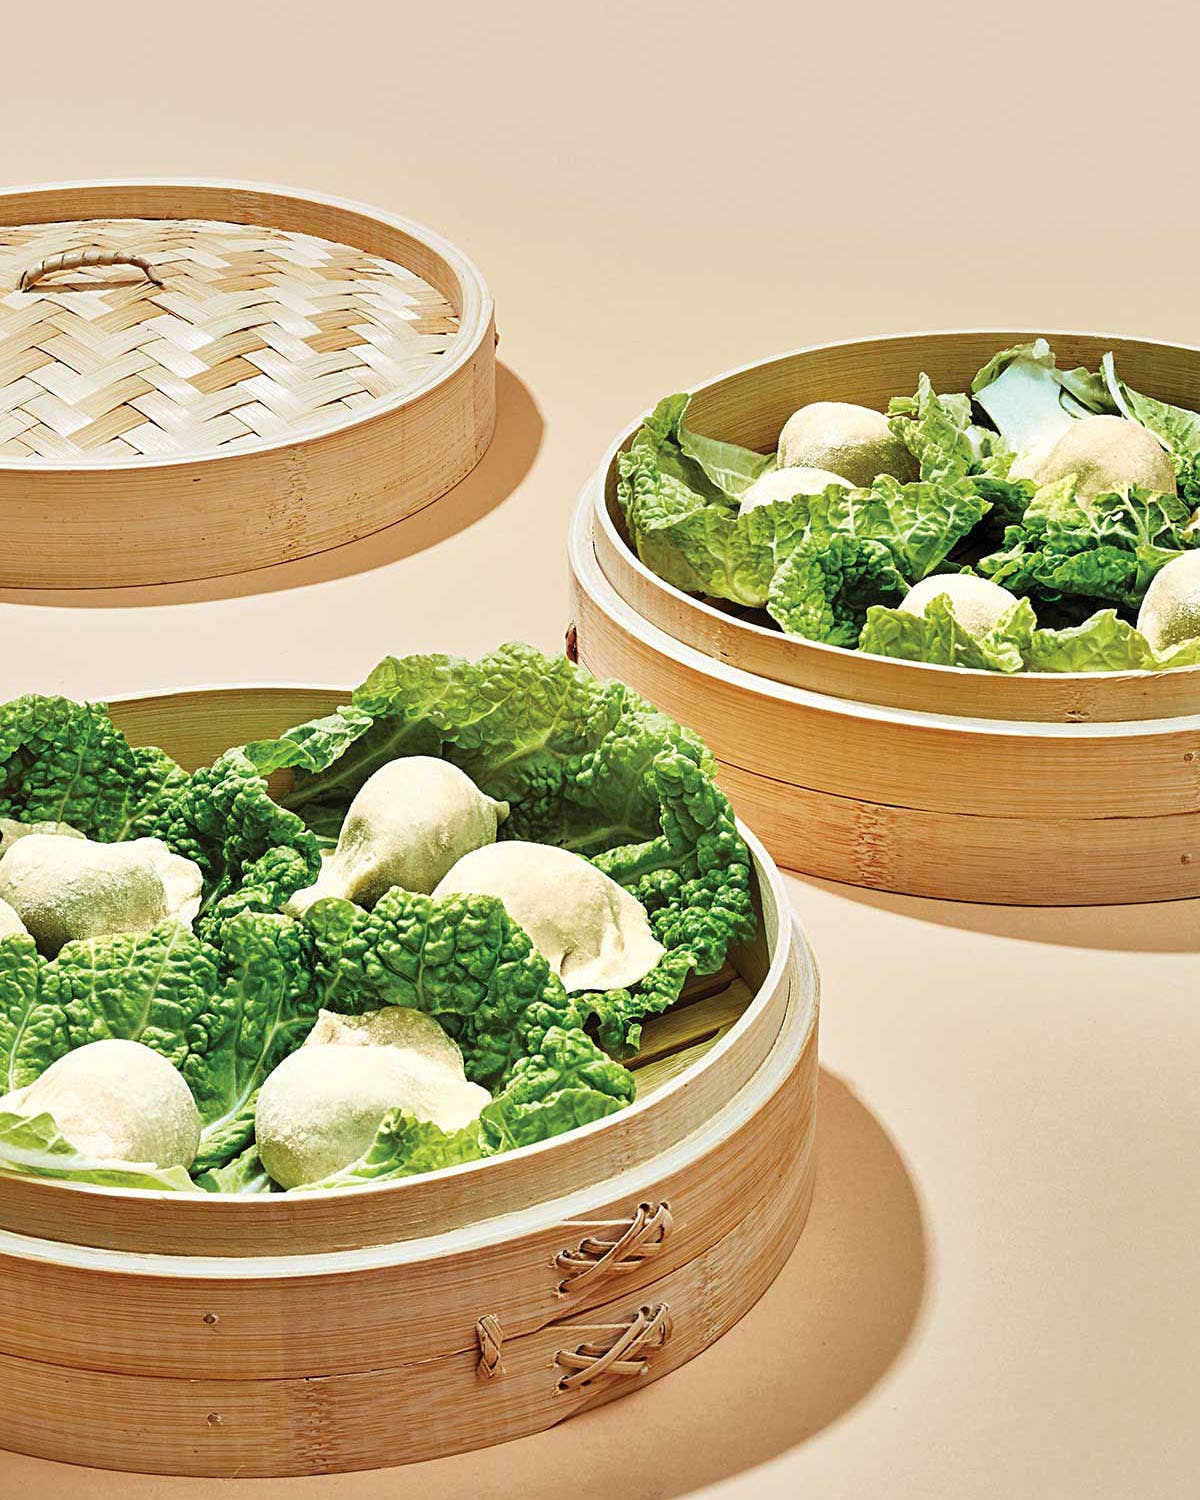 The Best Way to Improve Homemade Dumplings? A Bamboo Steamer